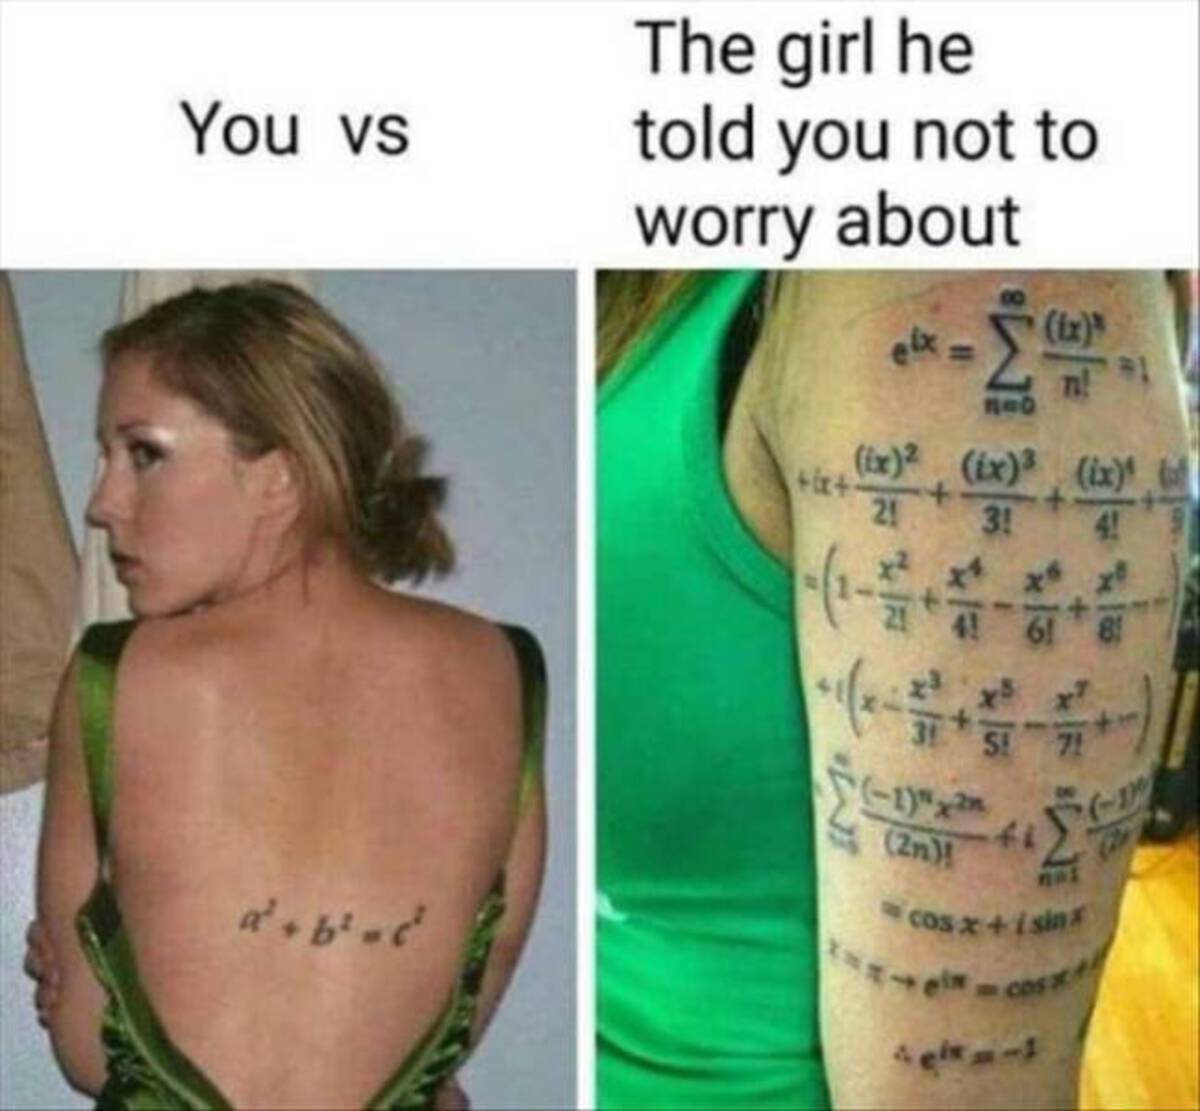 pythagoras theorem tattoo - You vs a' buc' The girl he told you not to worry about eix 16100 ix ix 2 ix ix 21 31 4! 31 S 1x2 2n! 5 71 fi cosxisin cos at